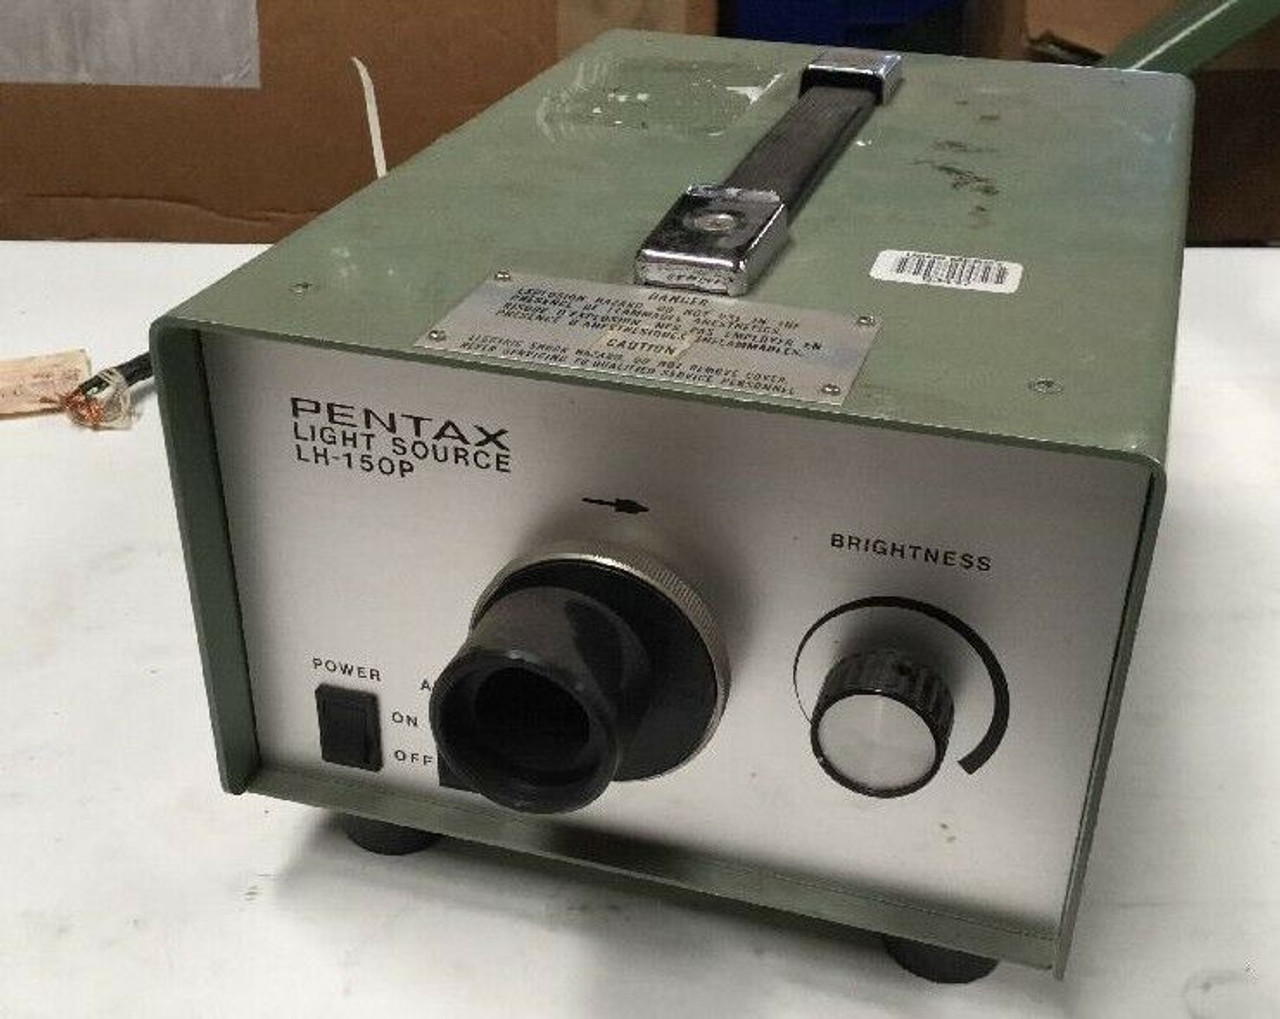 Pentax Lab Light Source LH-150p